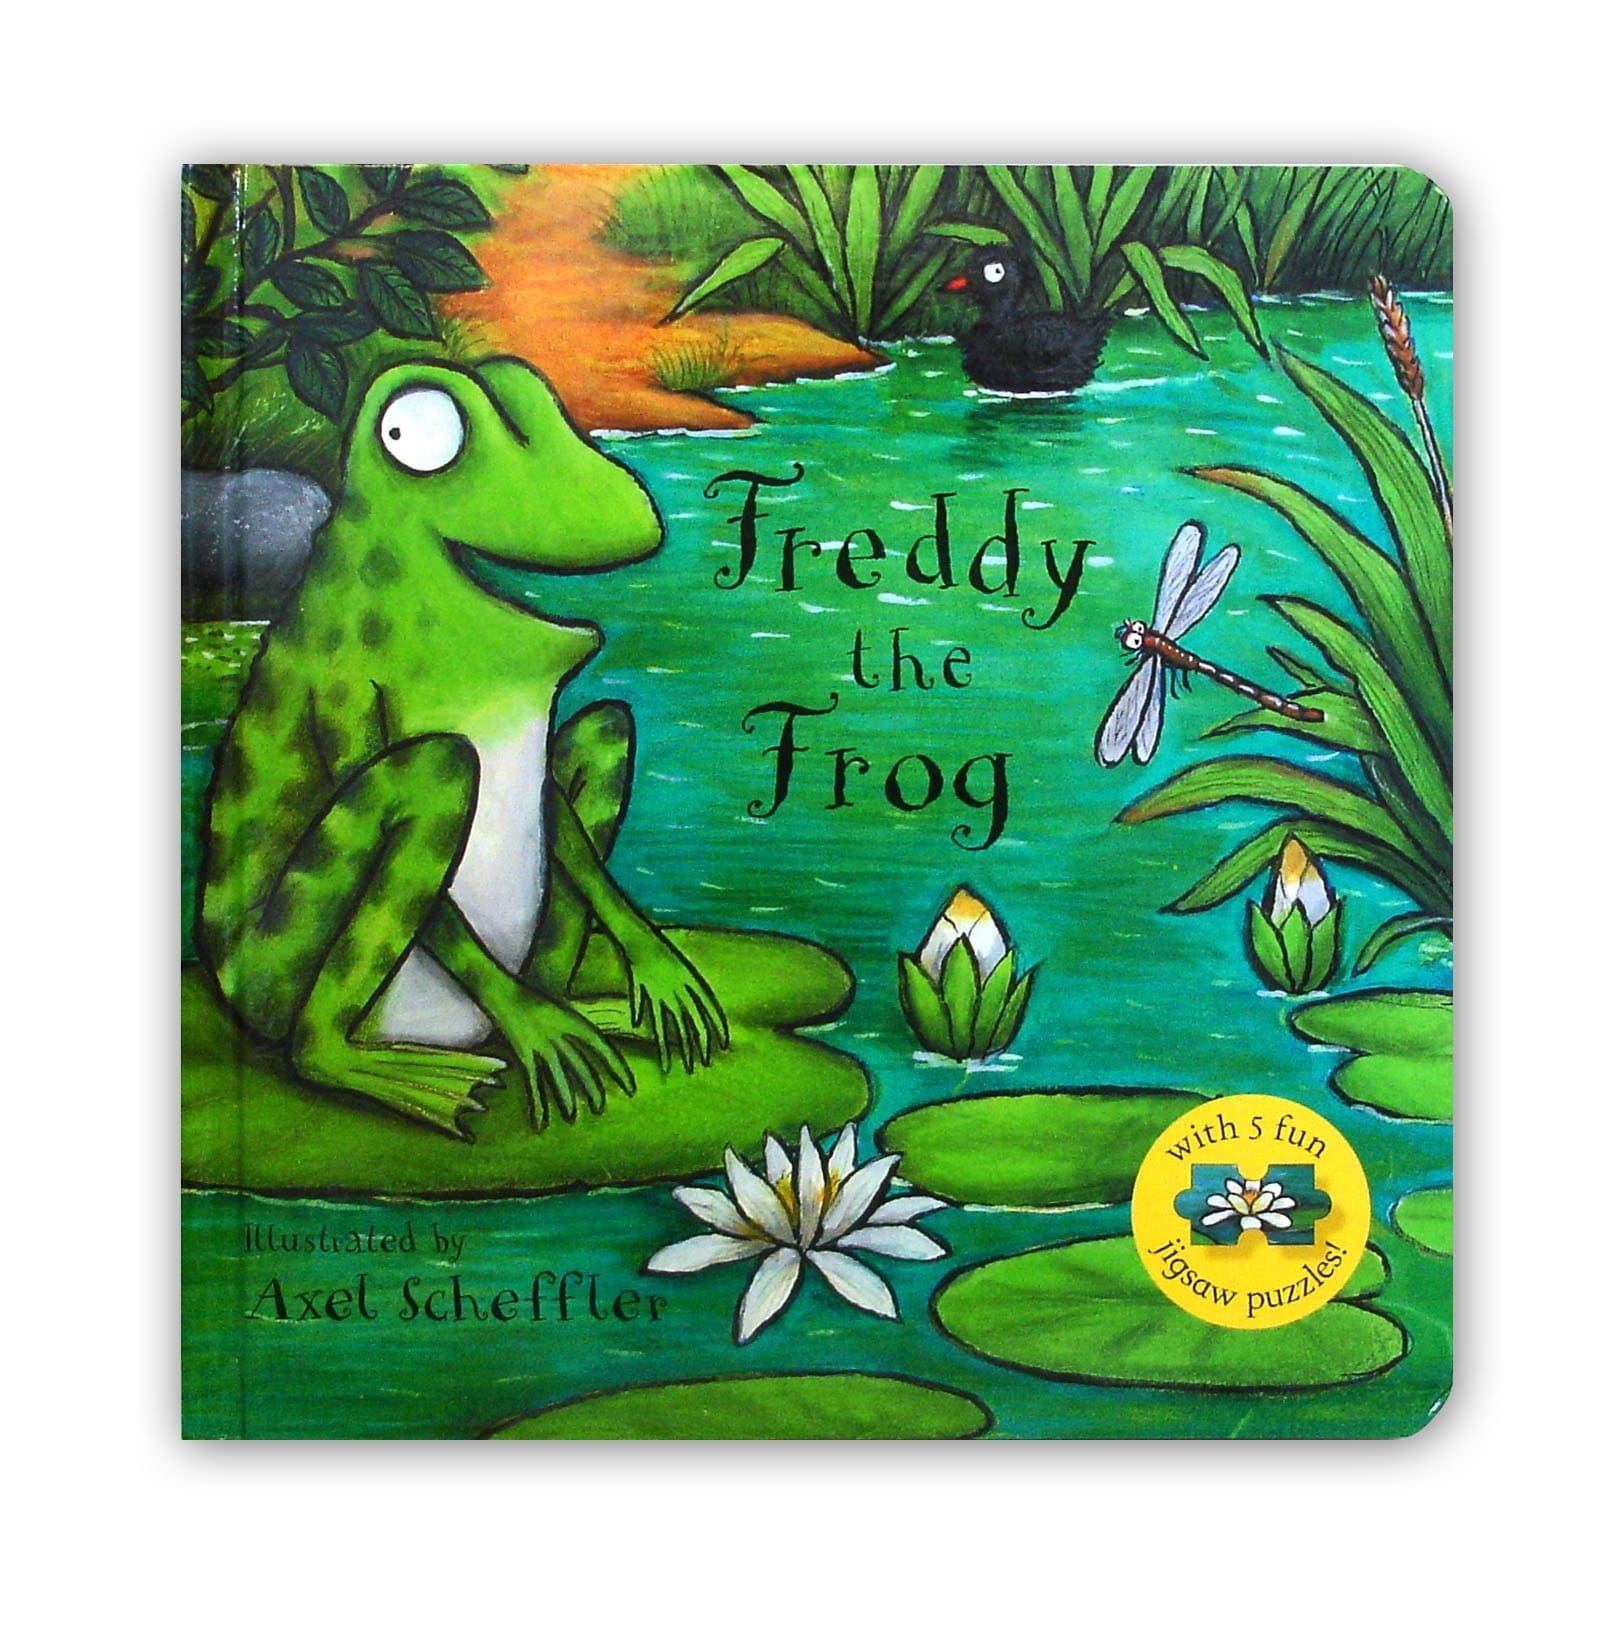 IMG : Freddy the Frog